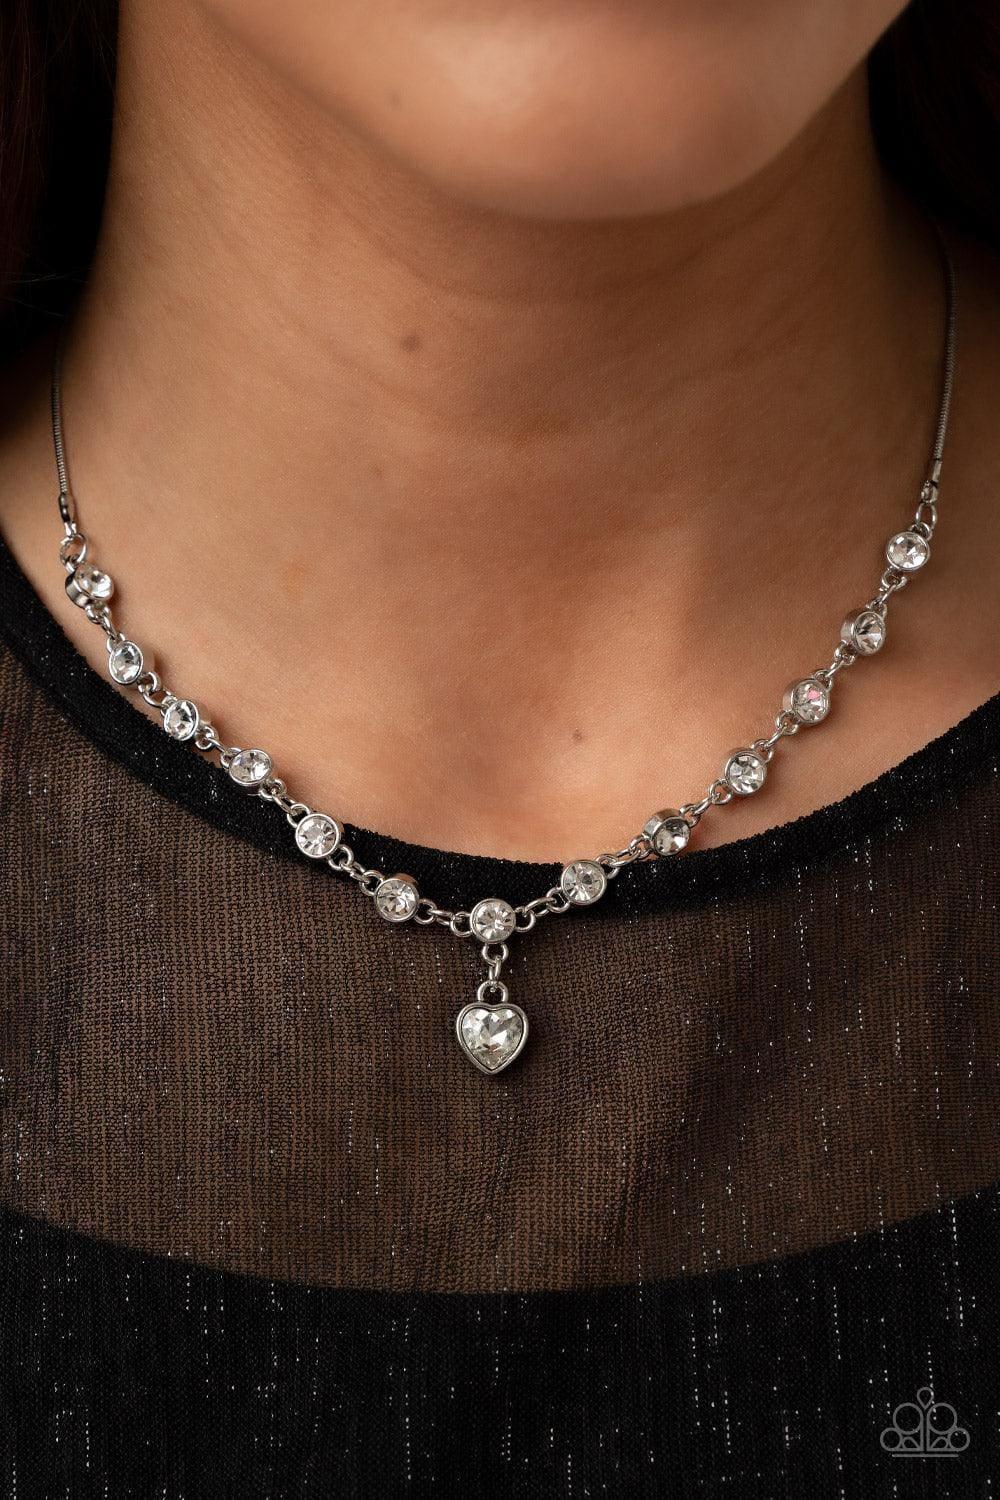 Paparazzi Accessories - True Love Trinket - White Necklace - Bling by JessieK